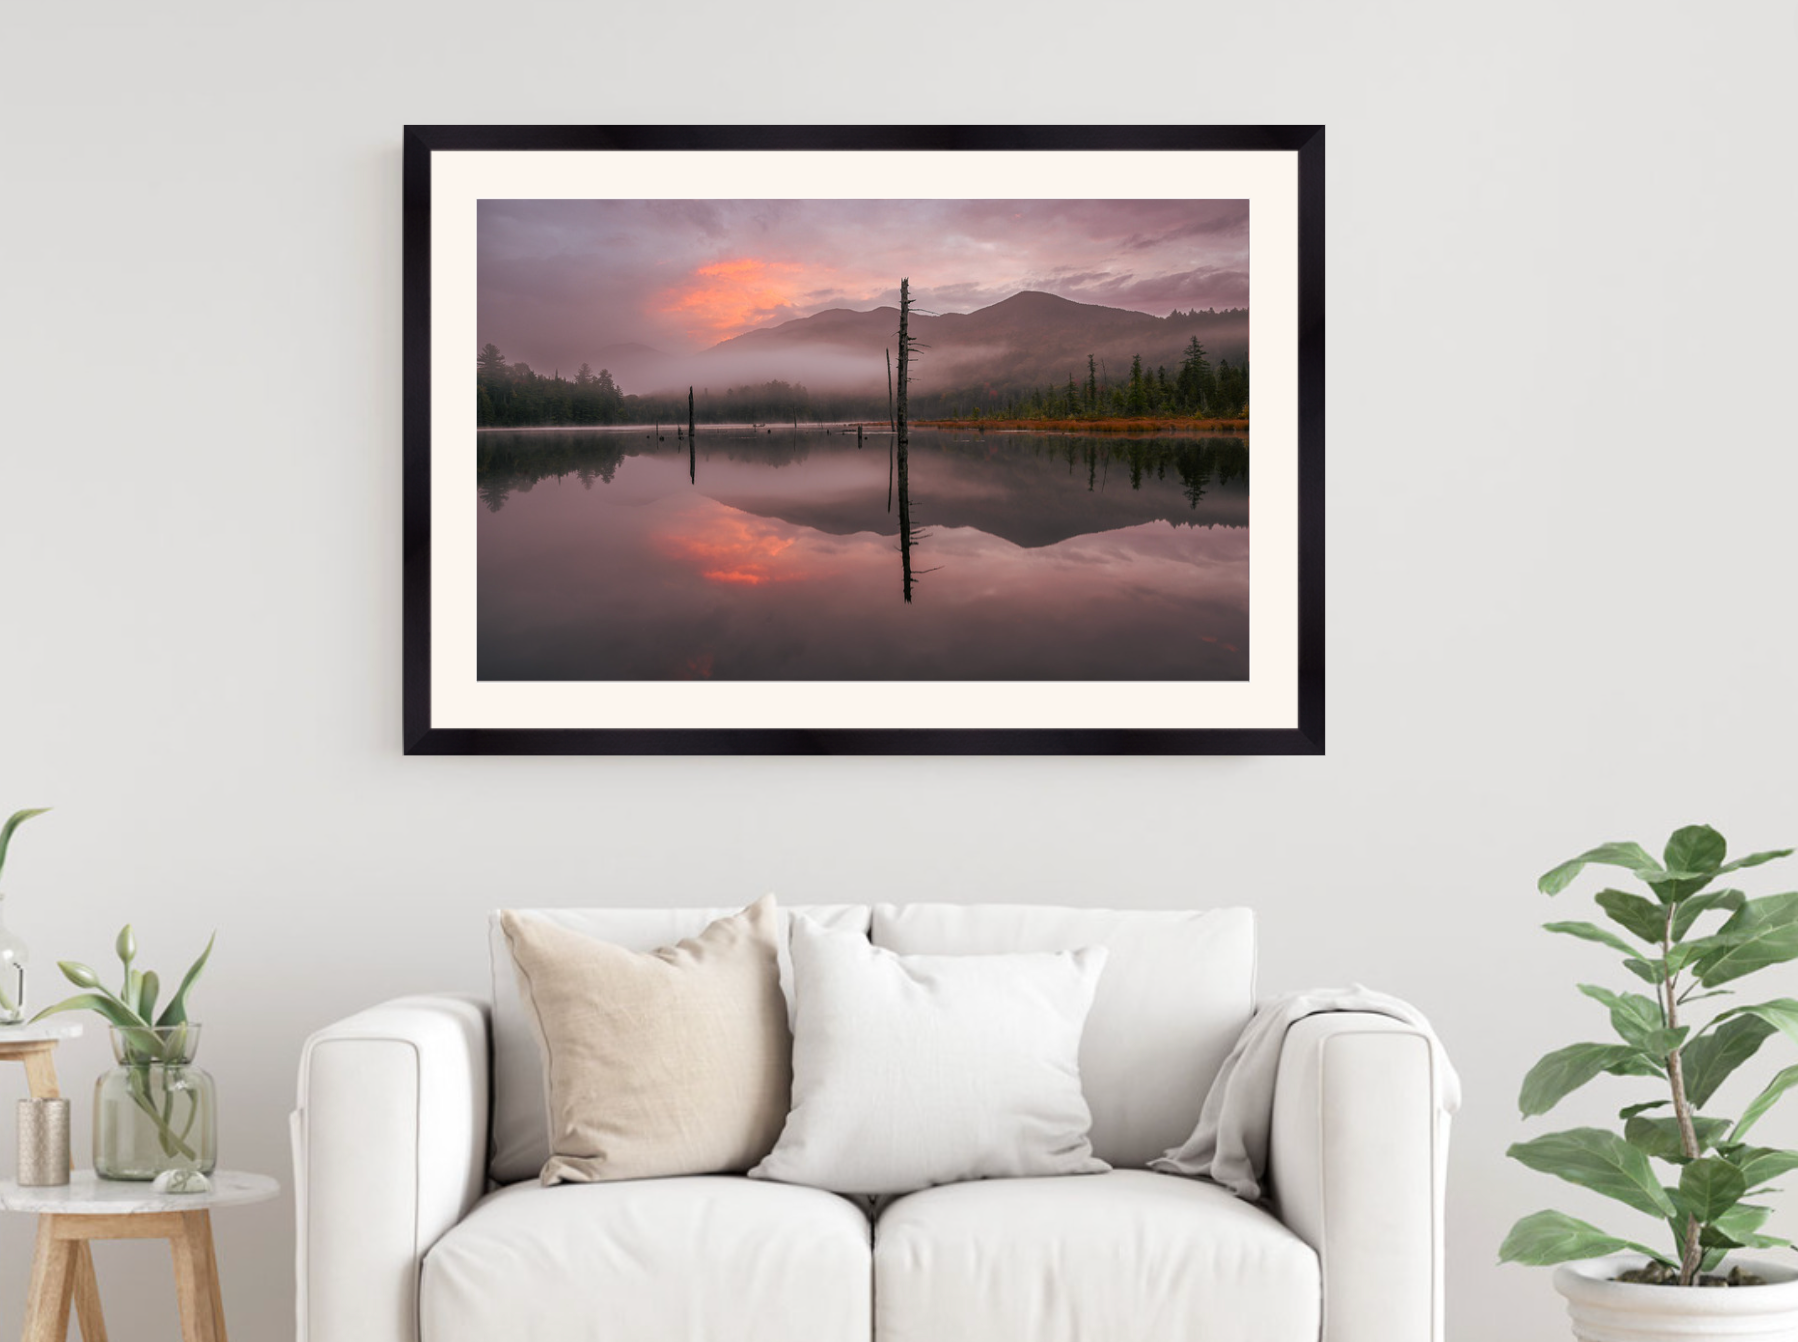 print of a sunrise reflection on a pond